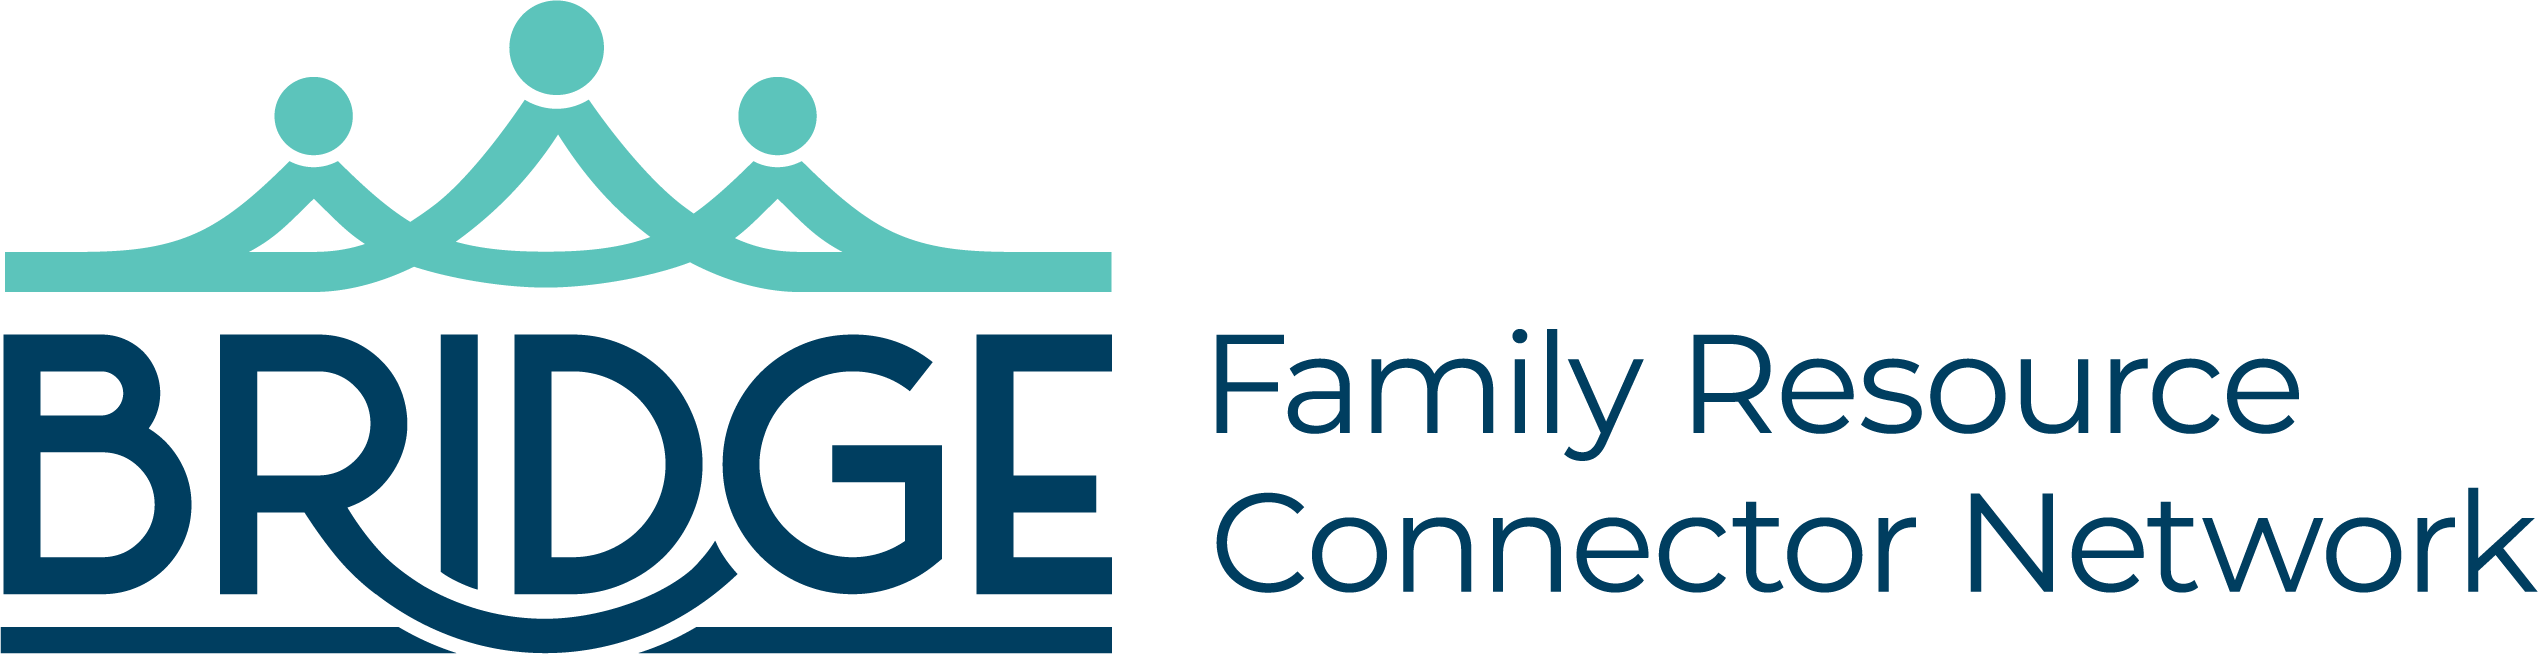 BRIDGE Family Resource Connector Network